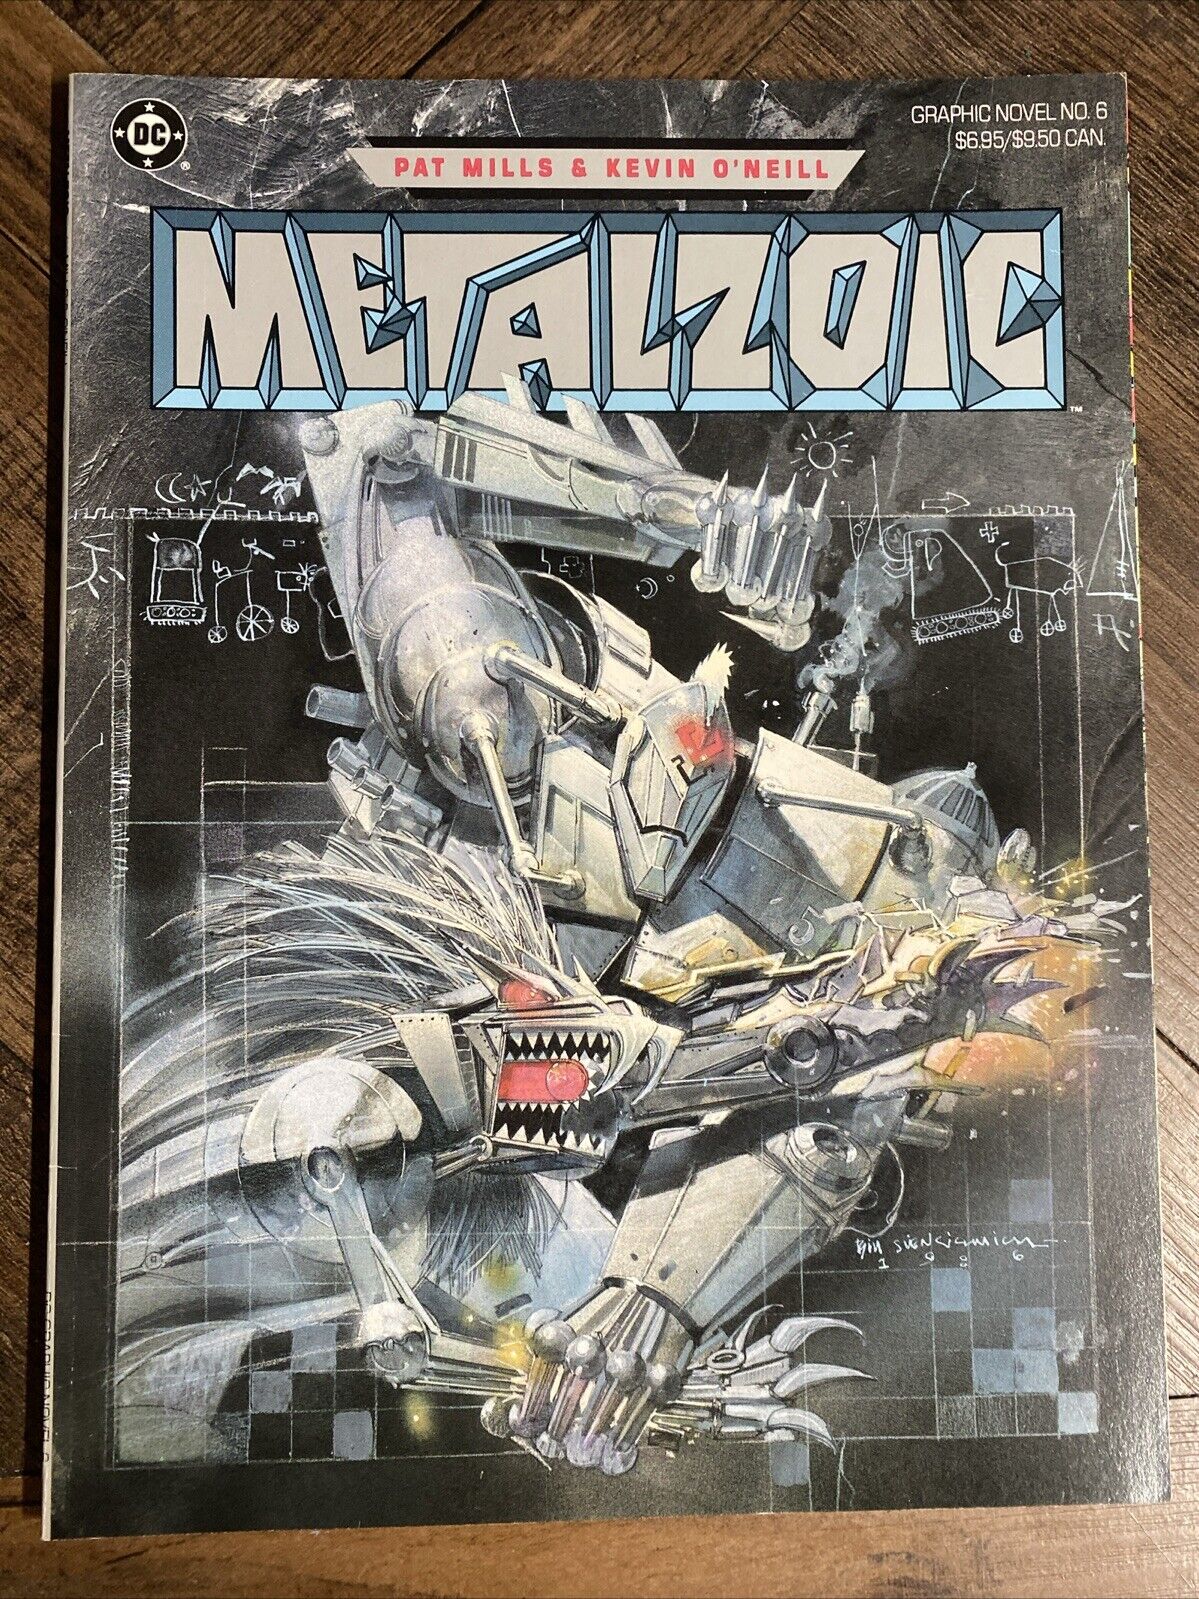 Vintage 1986 Metalzoic Graphic Novel #6 DC Pat Mills Kevin O'Neill 1st Print